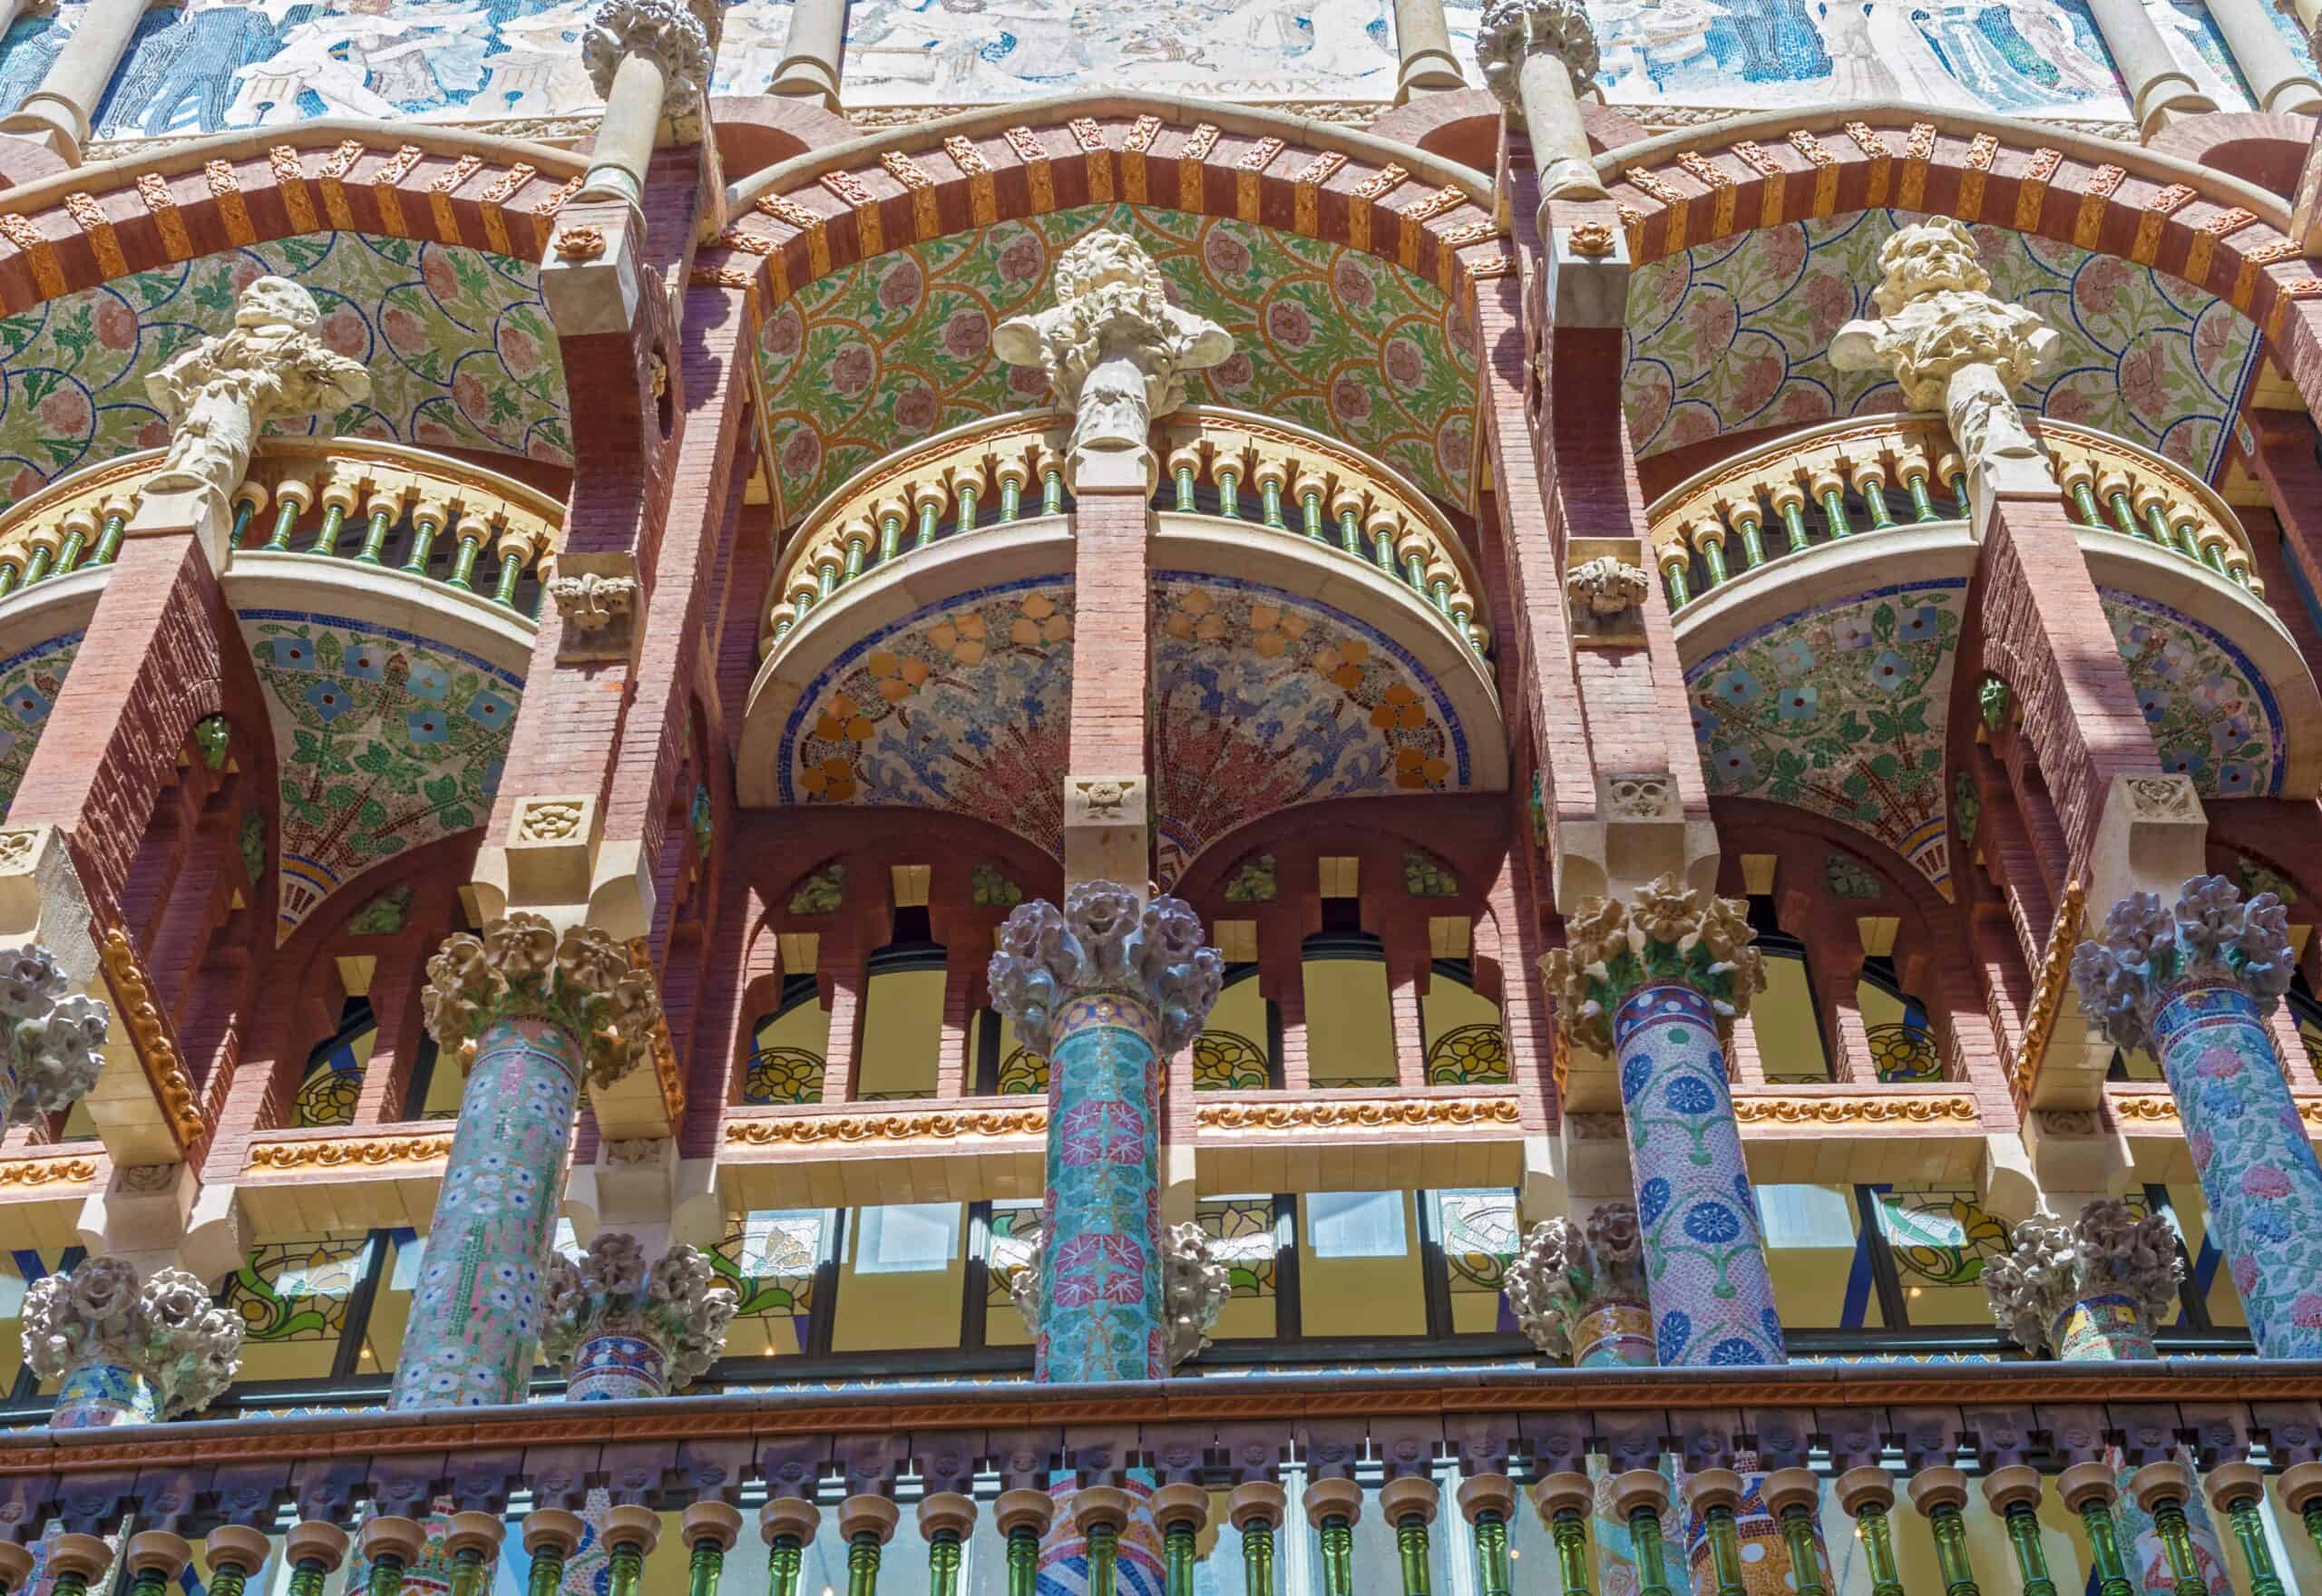 The Palau de la Musica Catalana in Barcelona, Spain